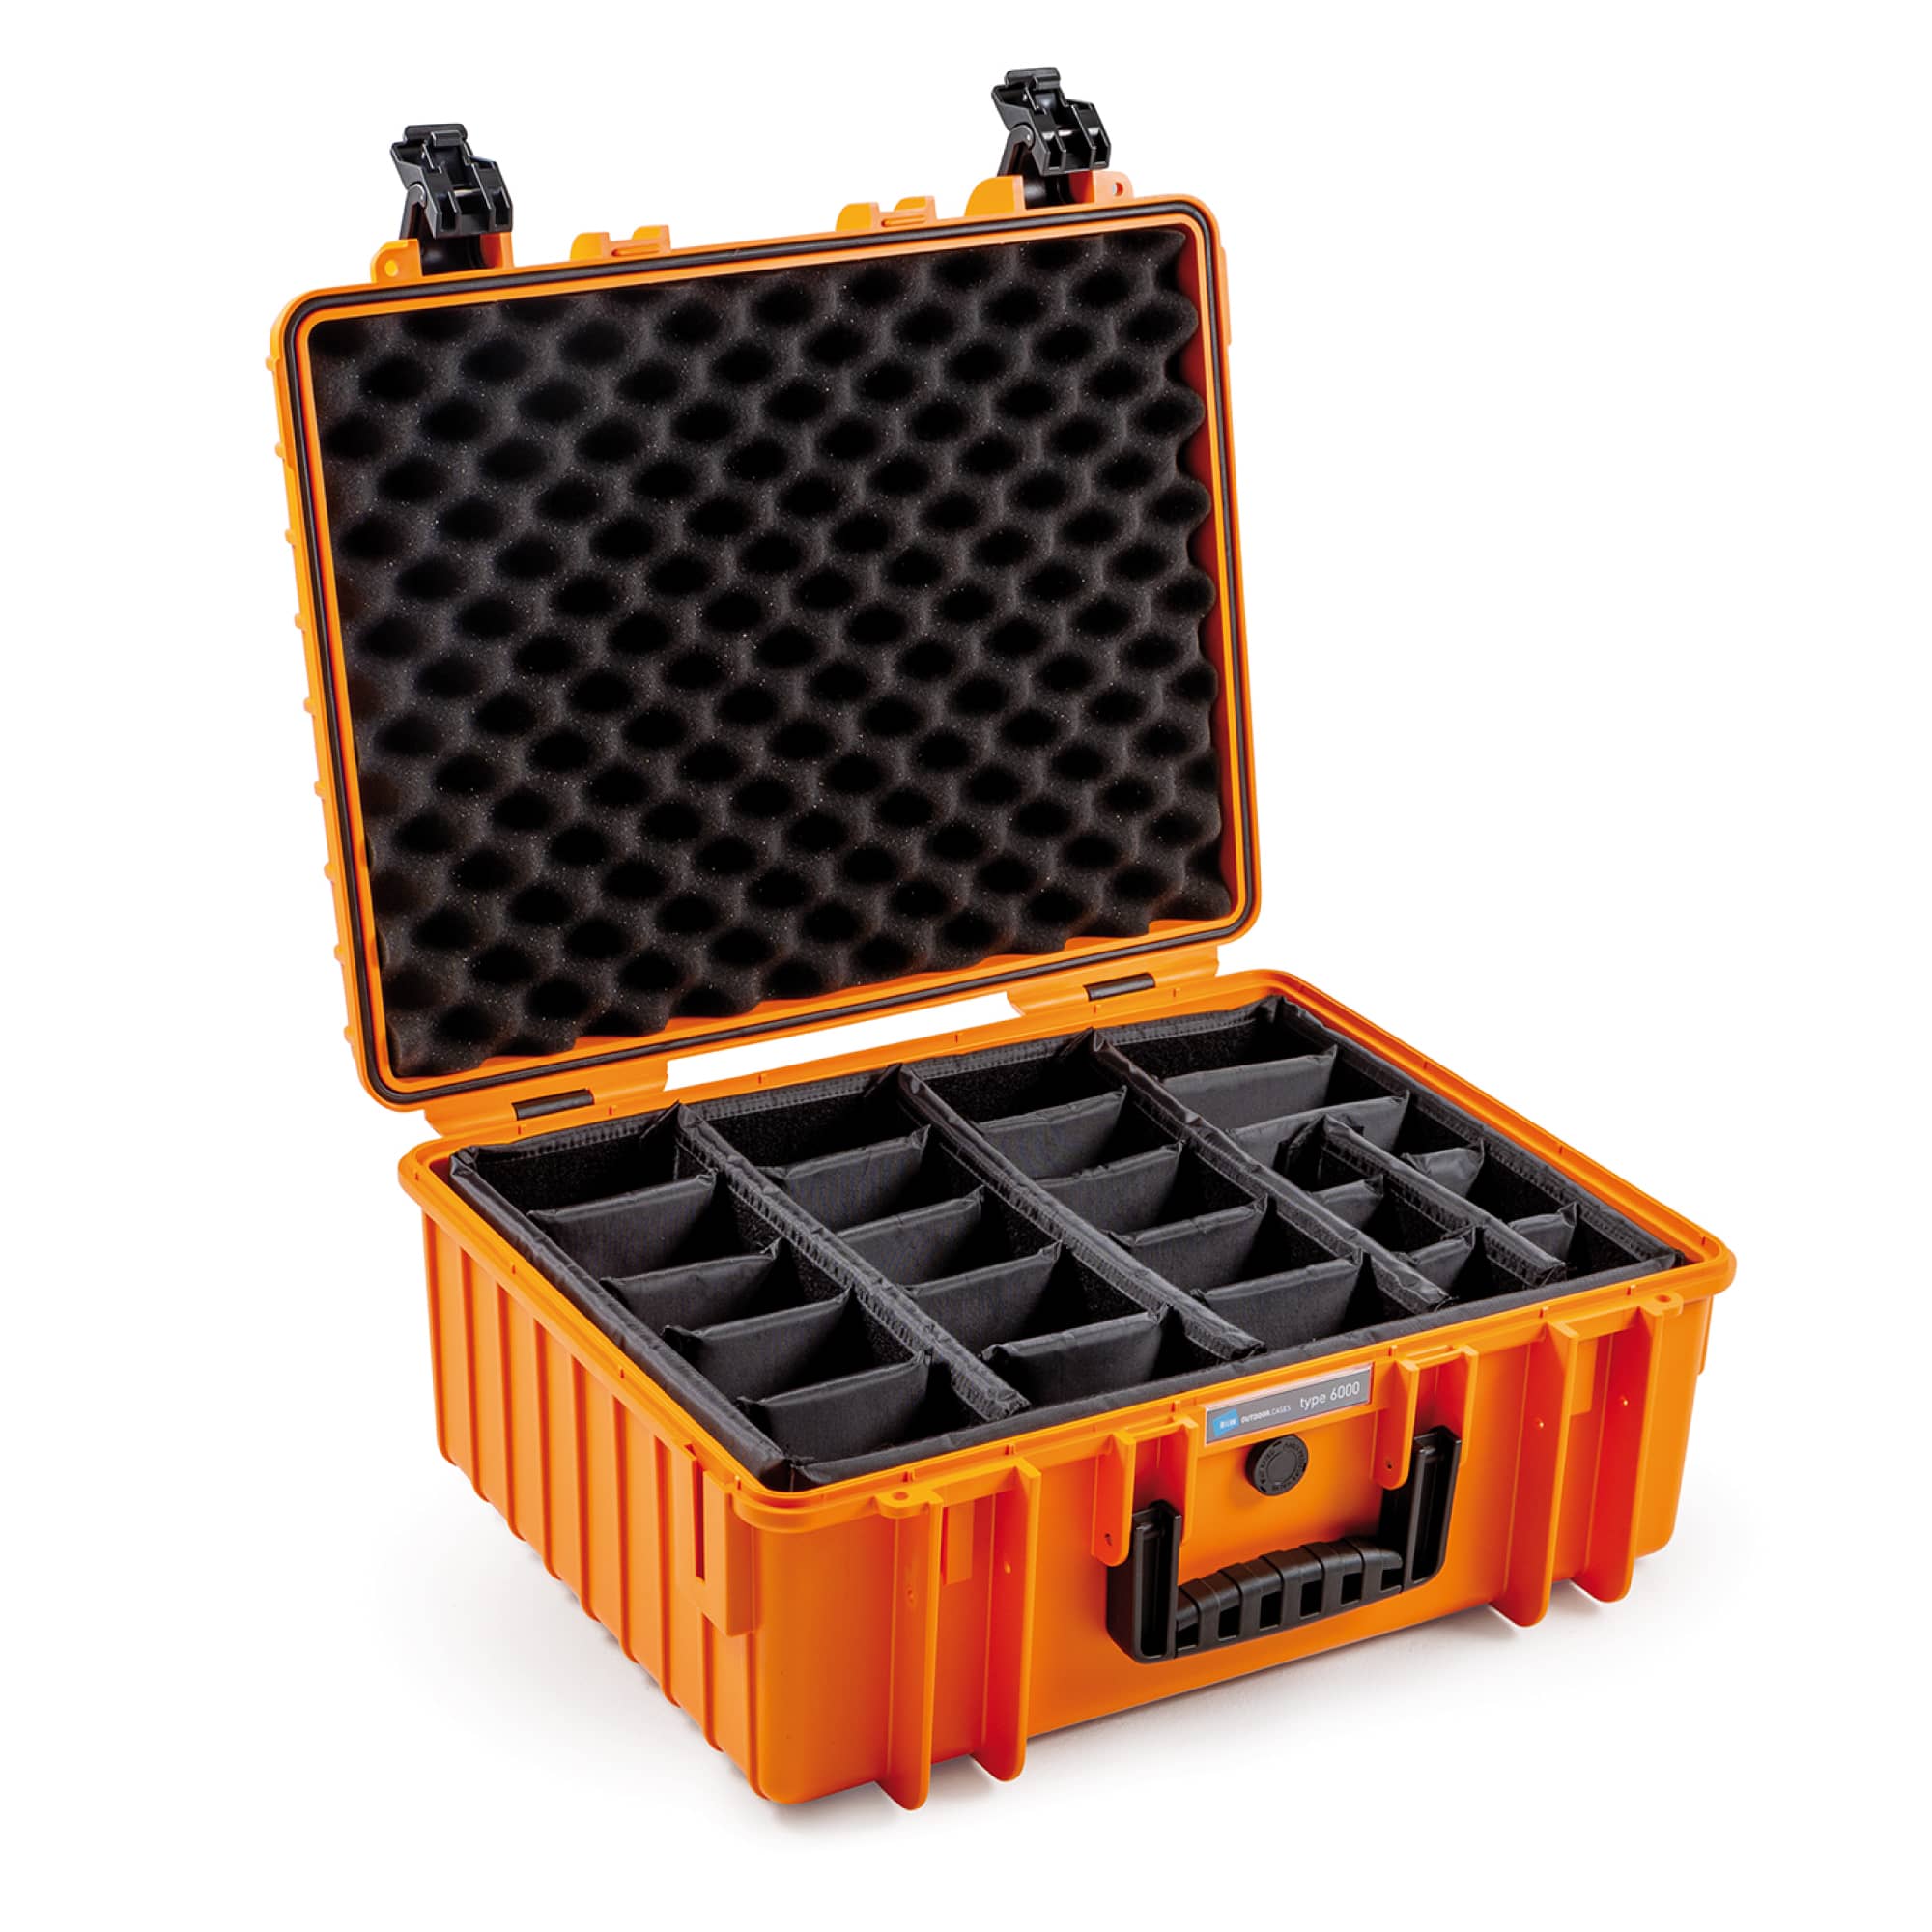 Order B&W Outdoor Case Type 6000 now at profi-cases.com